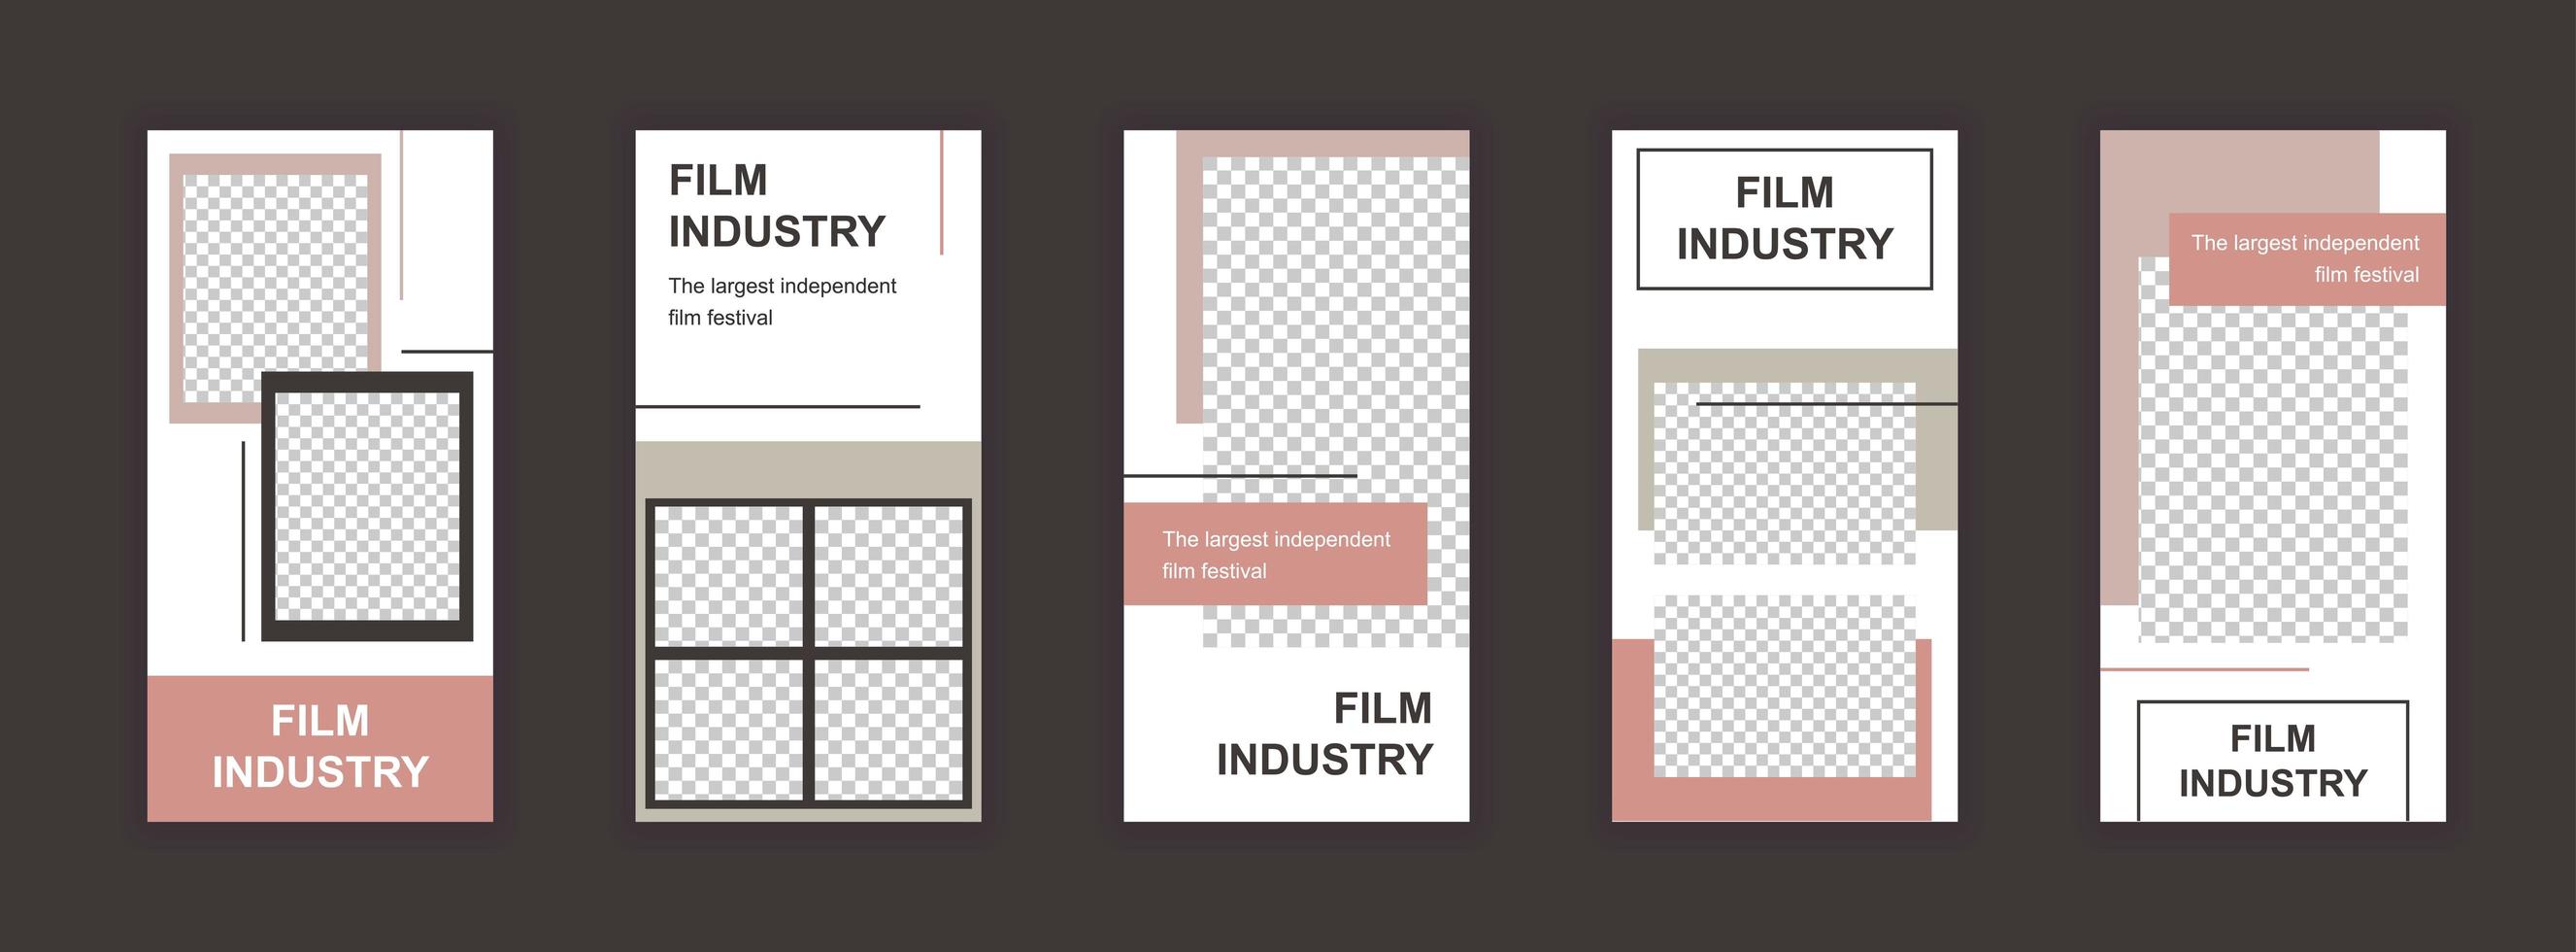 Film industry editable templates set for social media stories vector